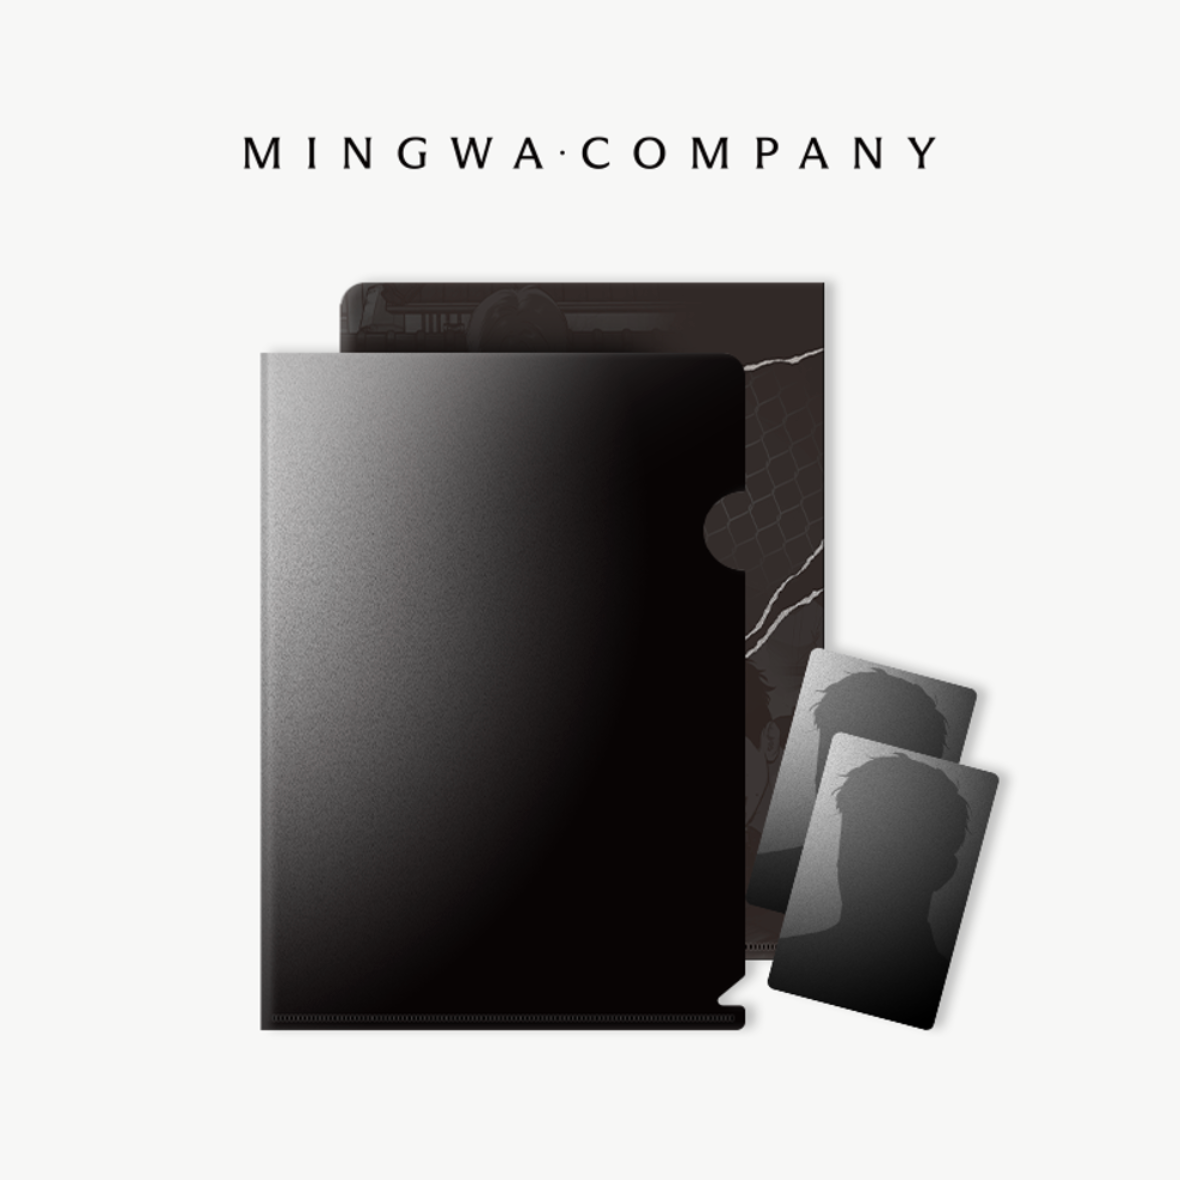 [re-stock]MinGwa POP-UP Store : mingwa company Clear File + 2 photo cards